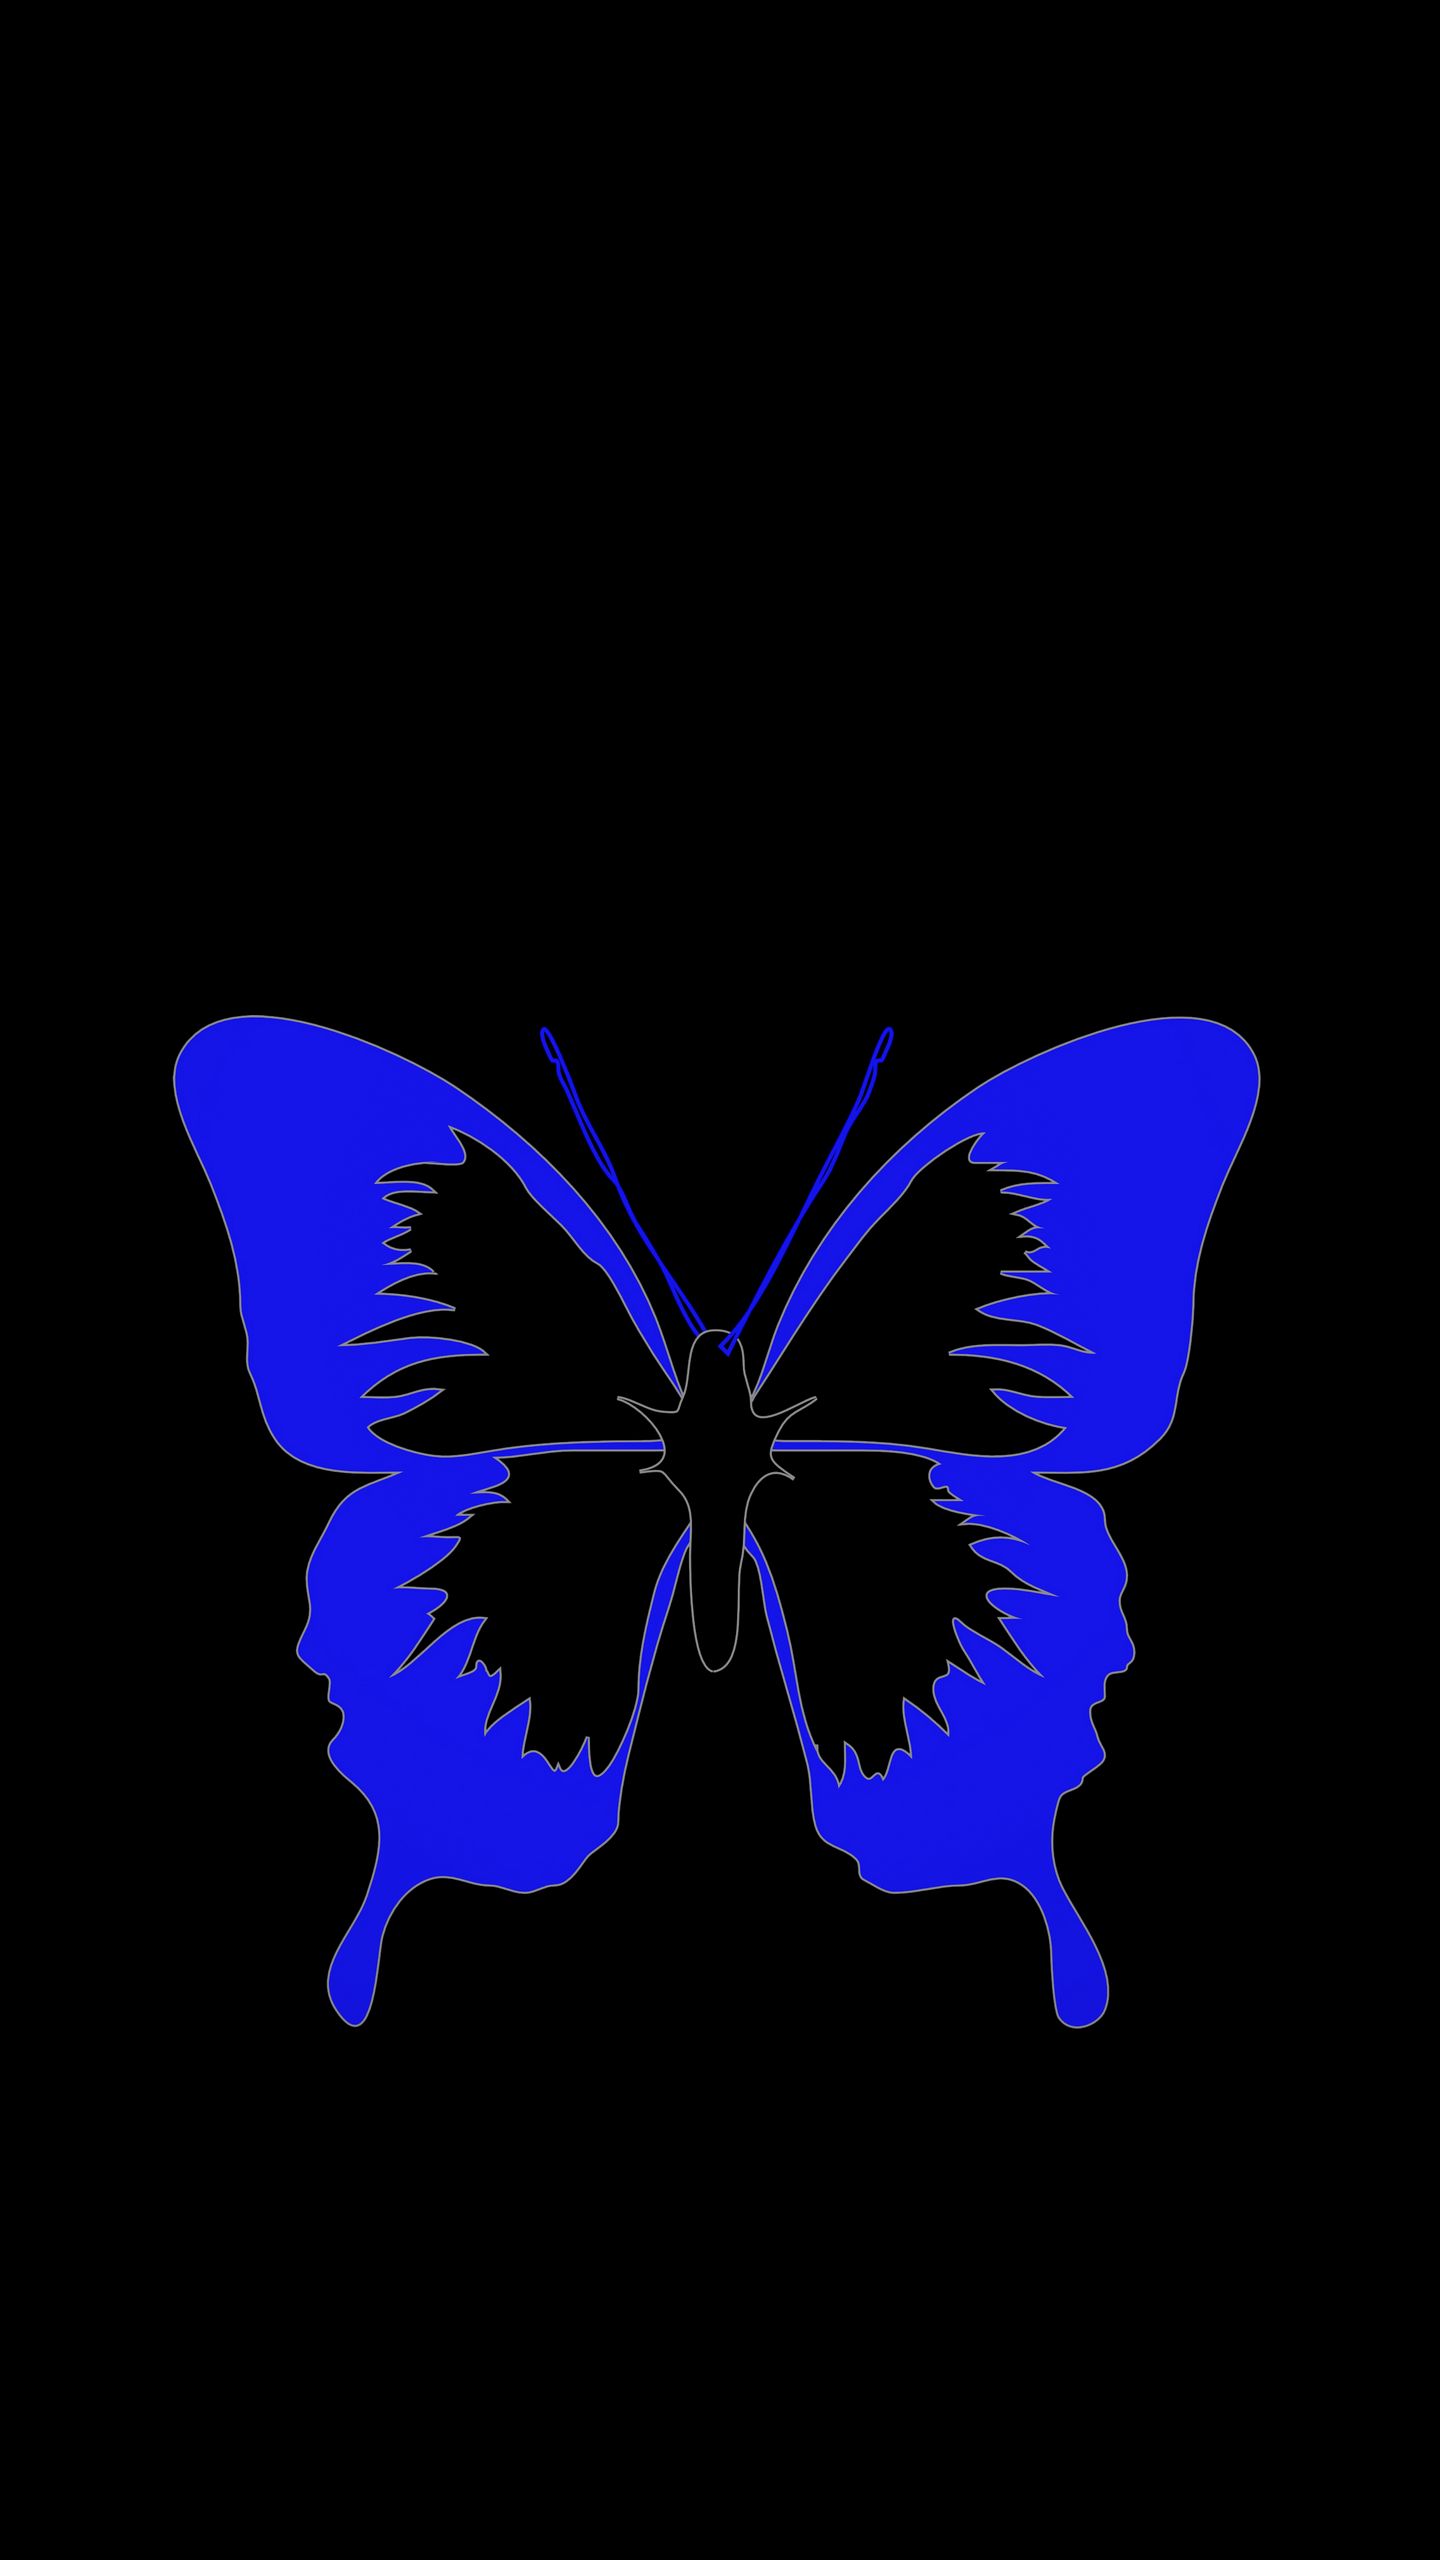 Download wallpaper 1440x2560 butterfly, minimalism, black, blue qhd samsung  galaxy s6, s7, edge, note, lg g4 hd background